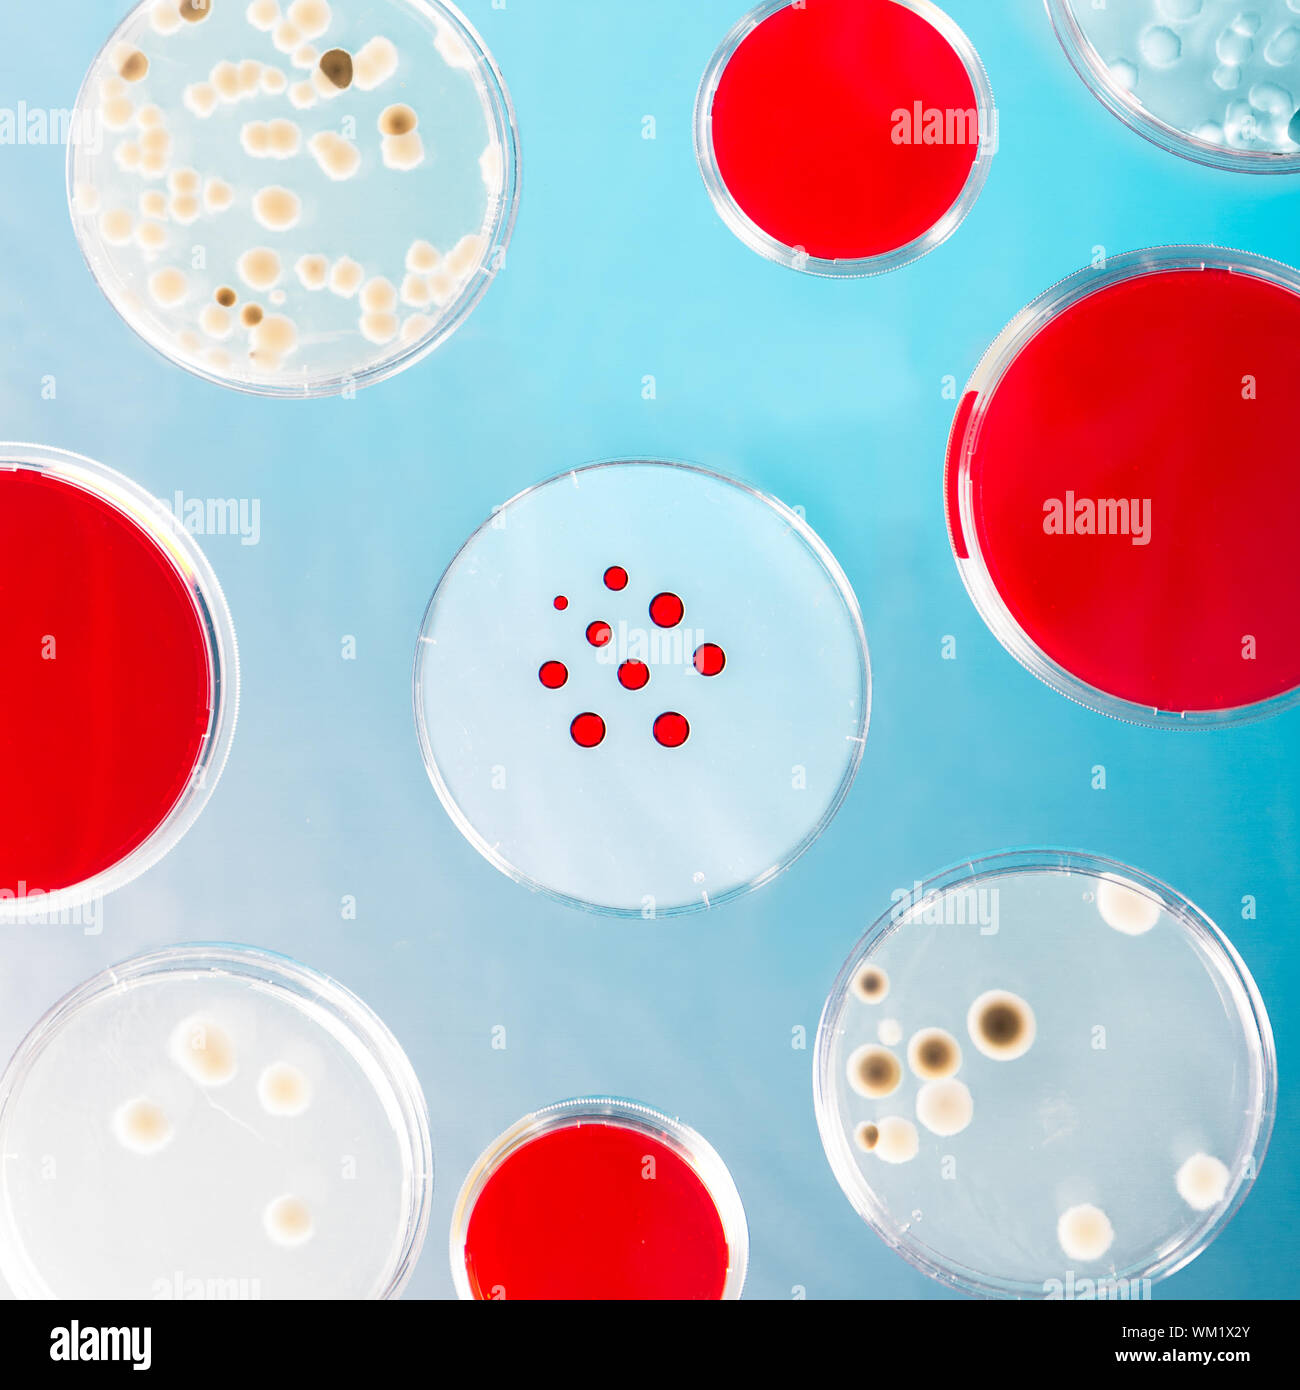 Pattern of petri dishes. Stock Photo